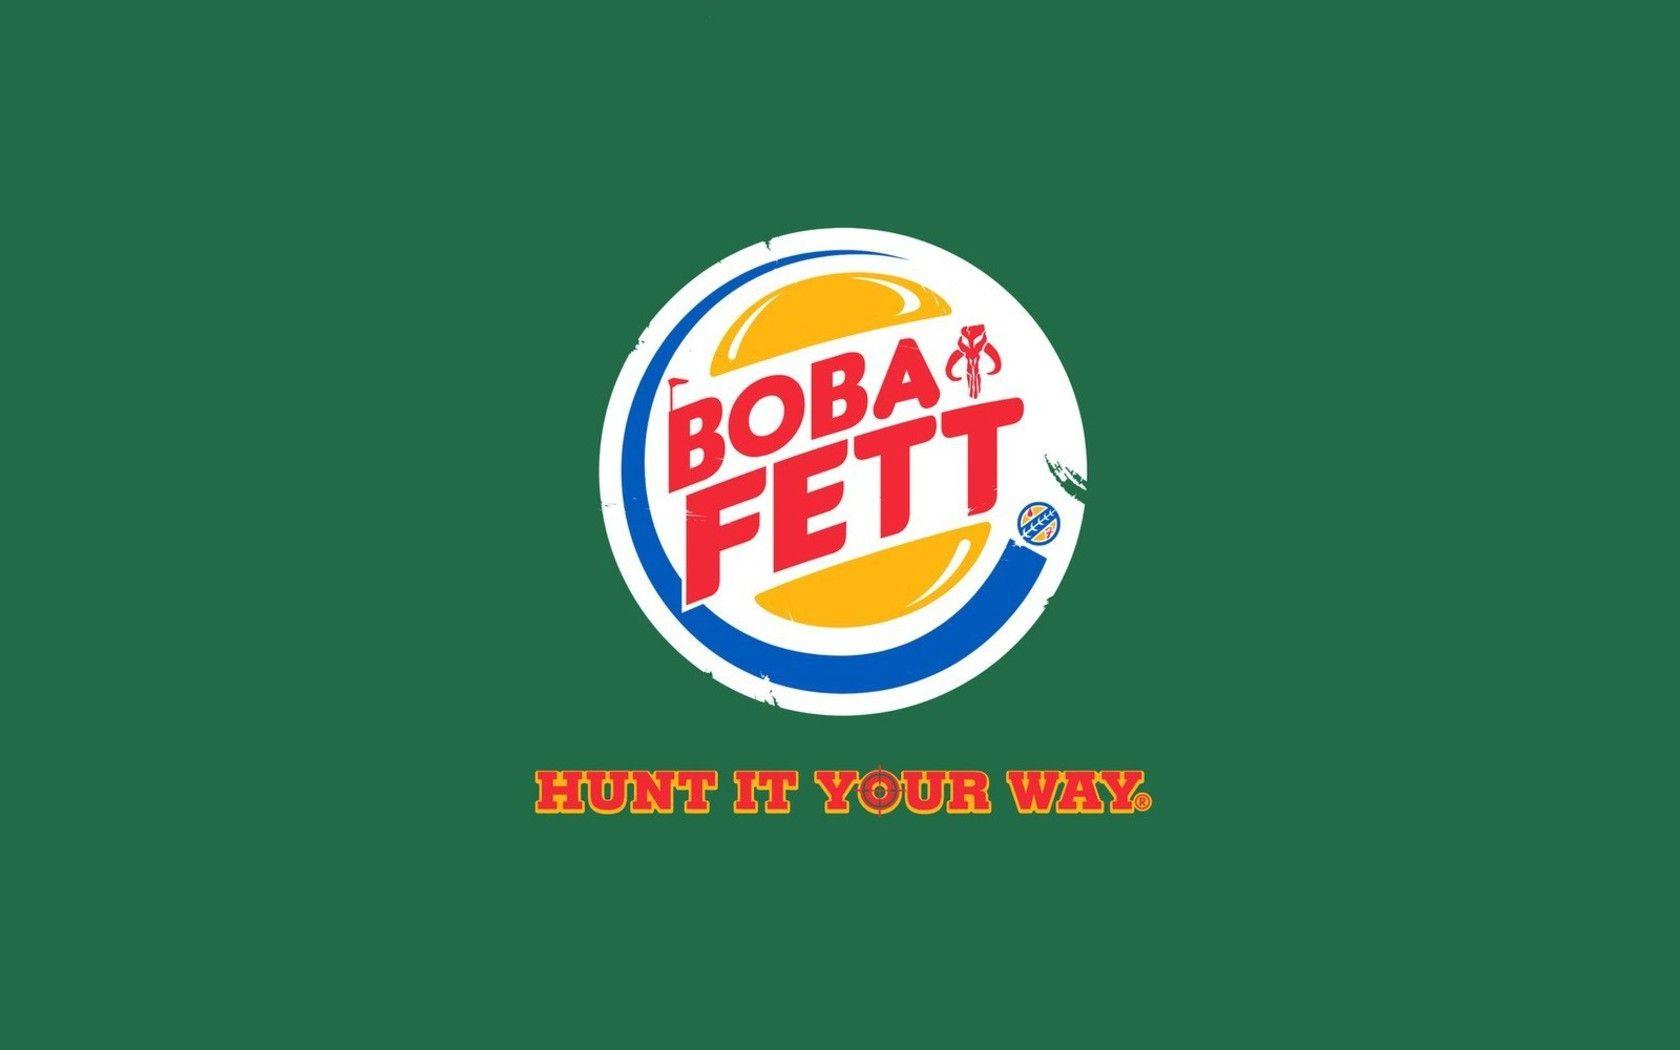 Boba fett front parody logos burger king wallpapers